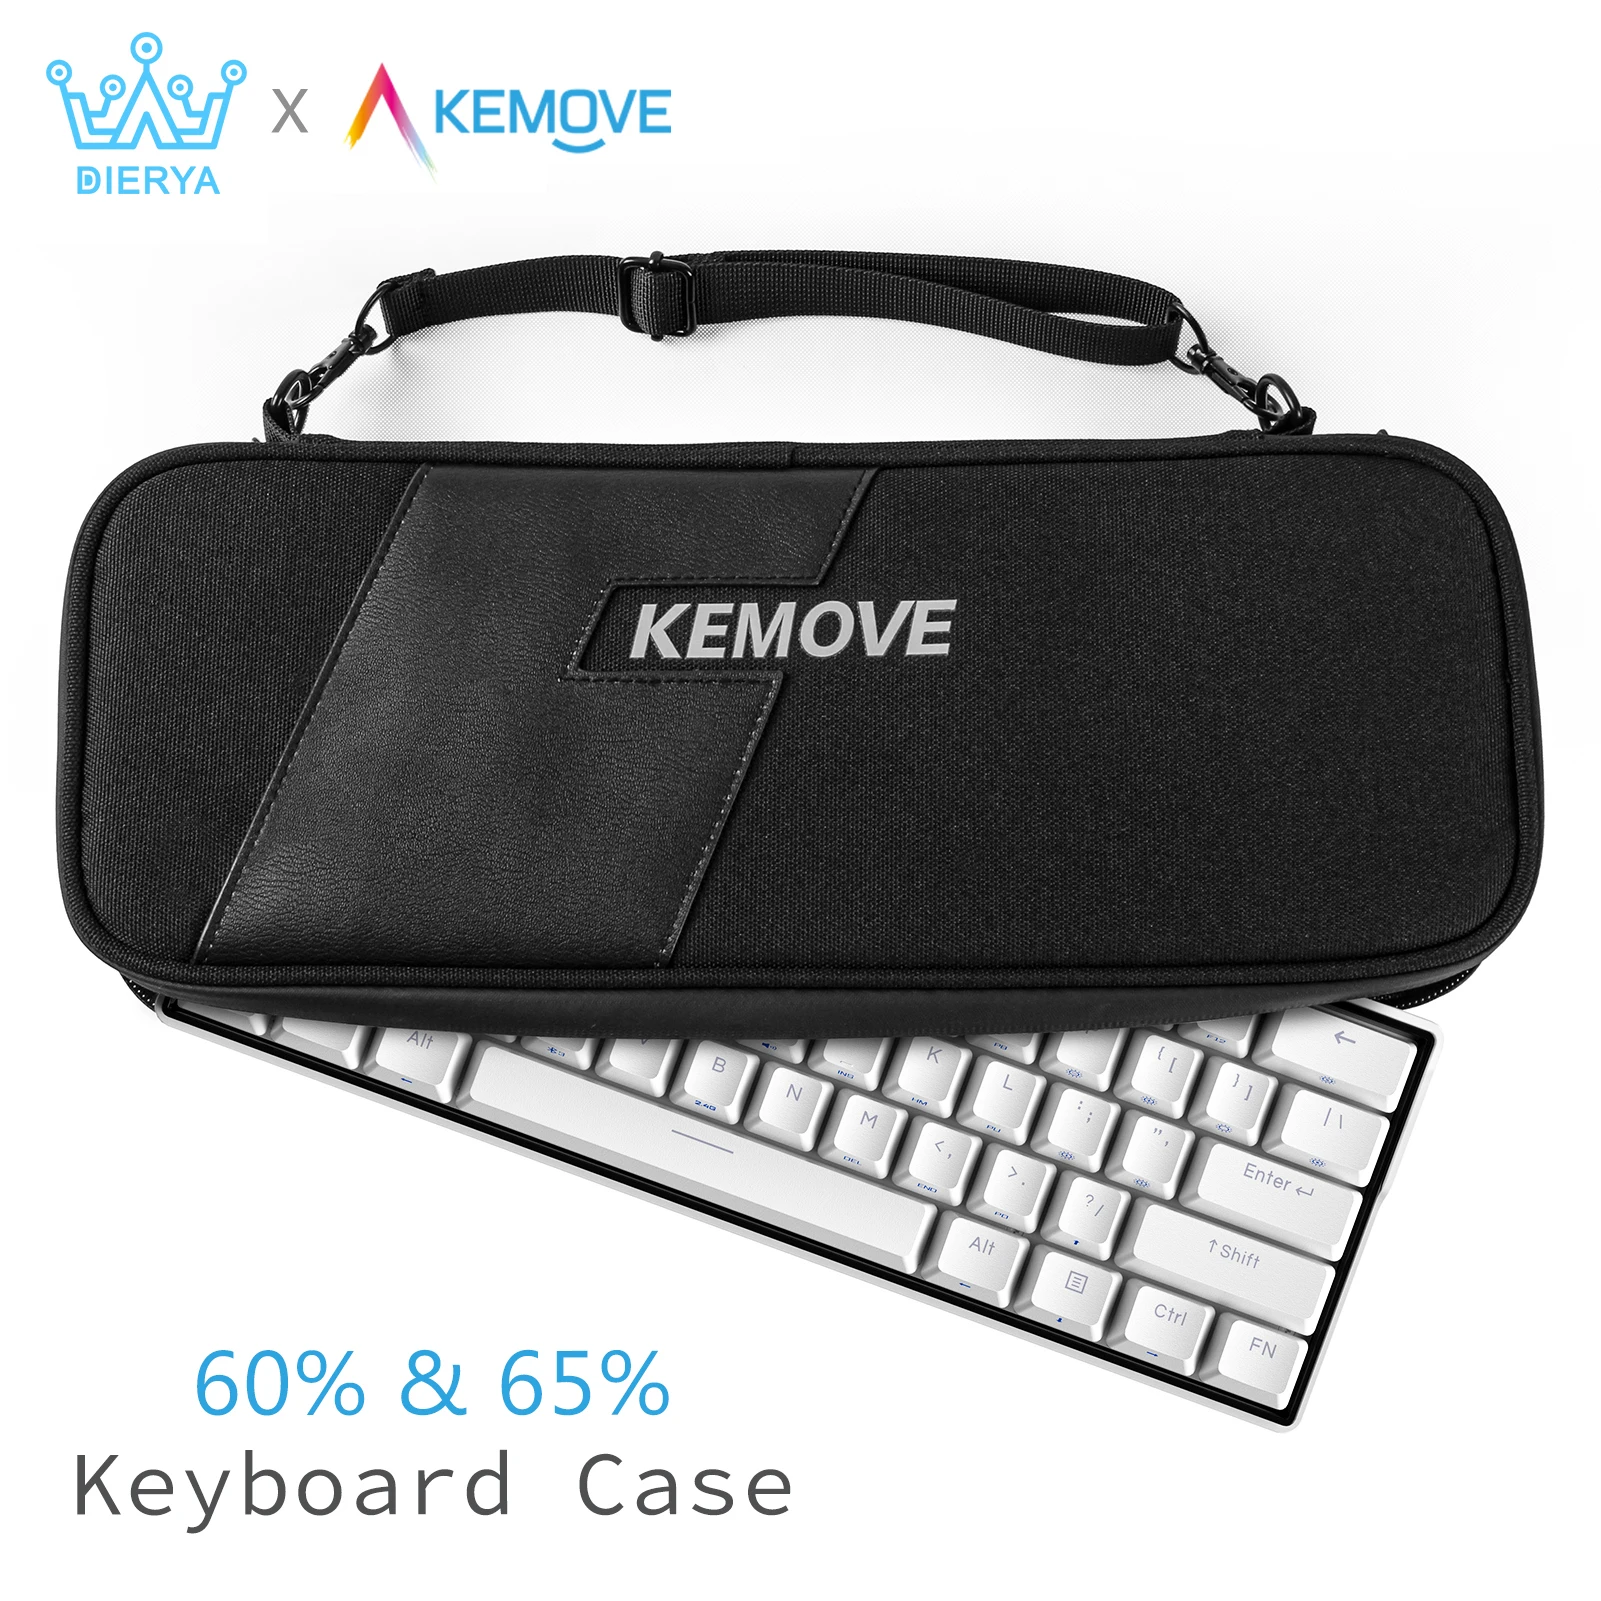 KEMOVE Keyboard Case Hard EVA Sleeve Travel Carrying Keyboard Bag for 60% 65% Layout Mechanical Keyboard Business Travel Office